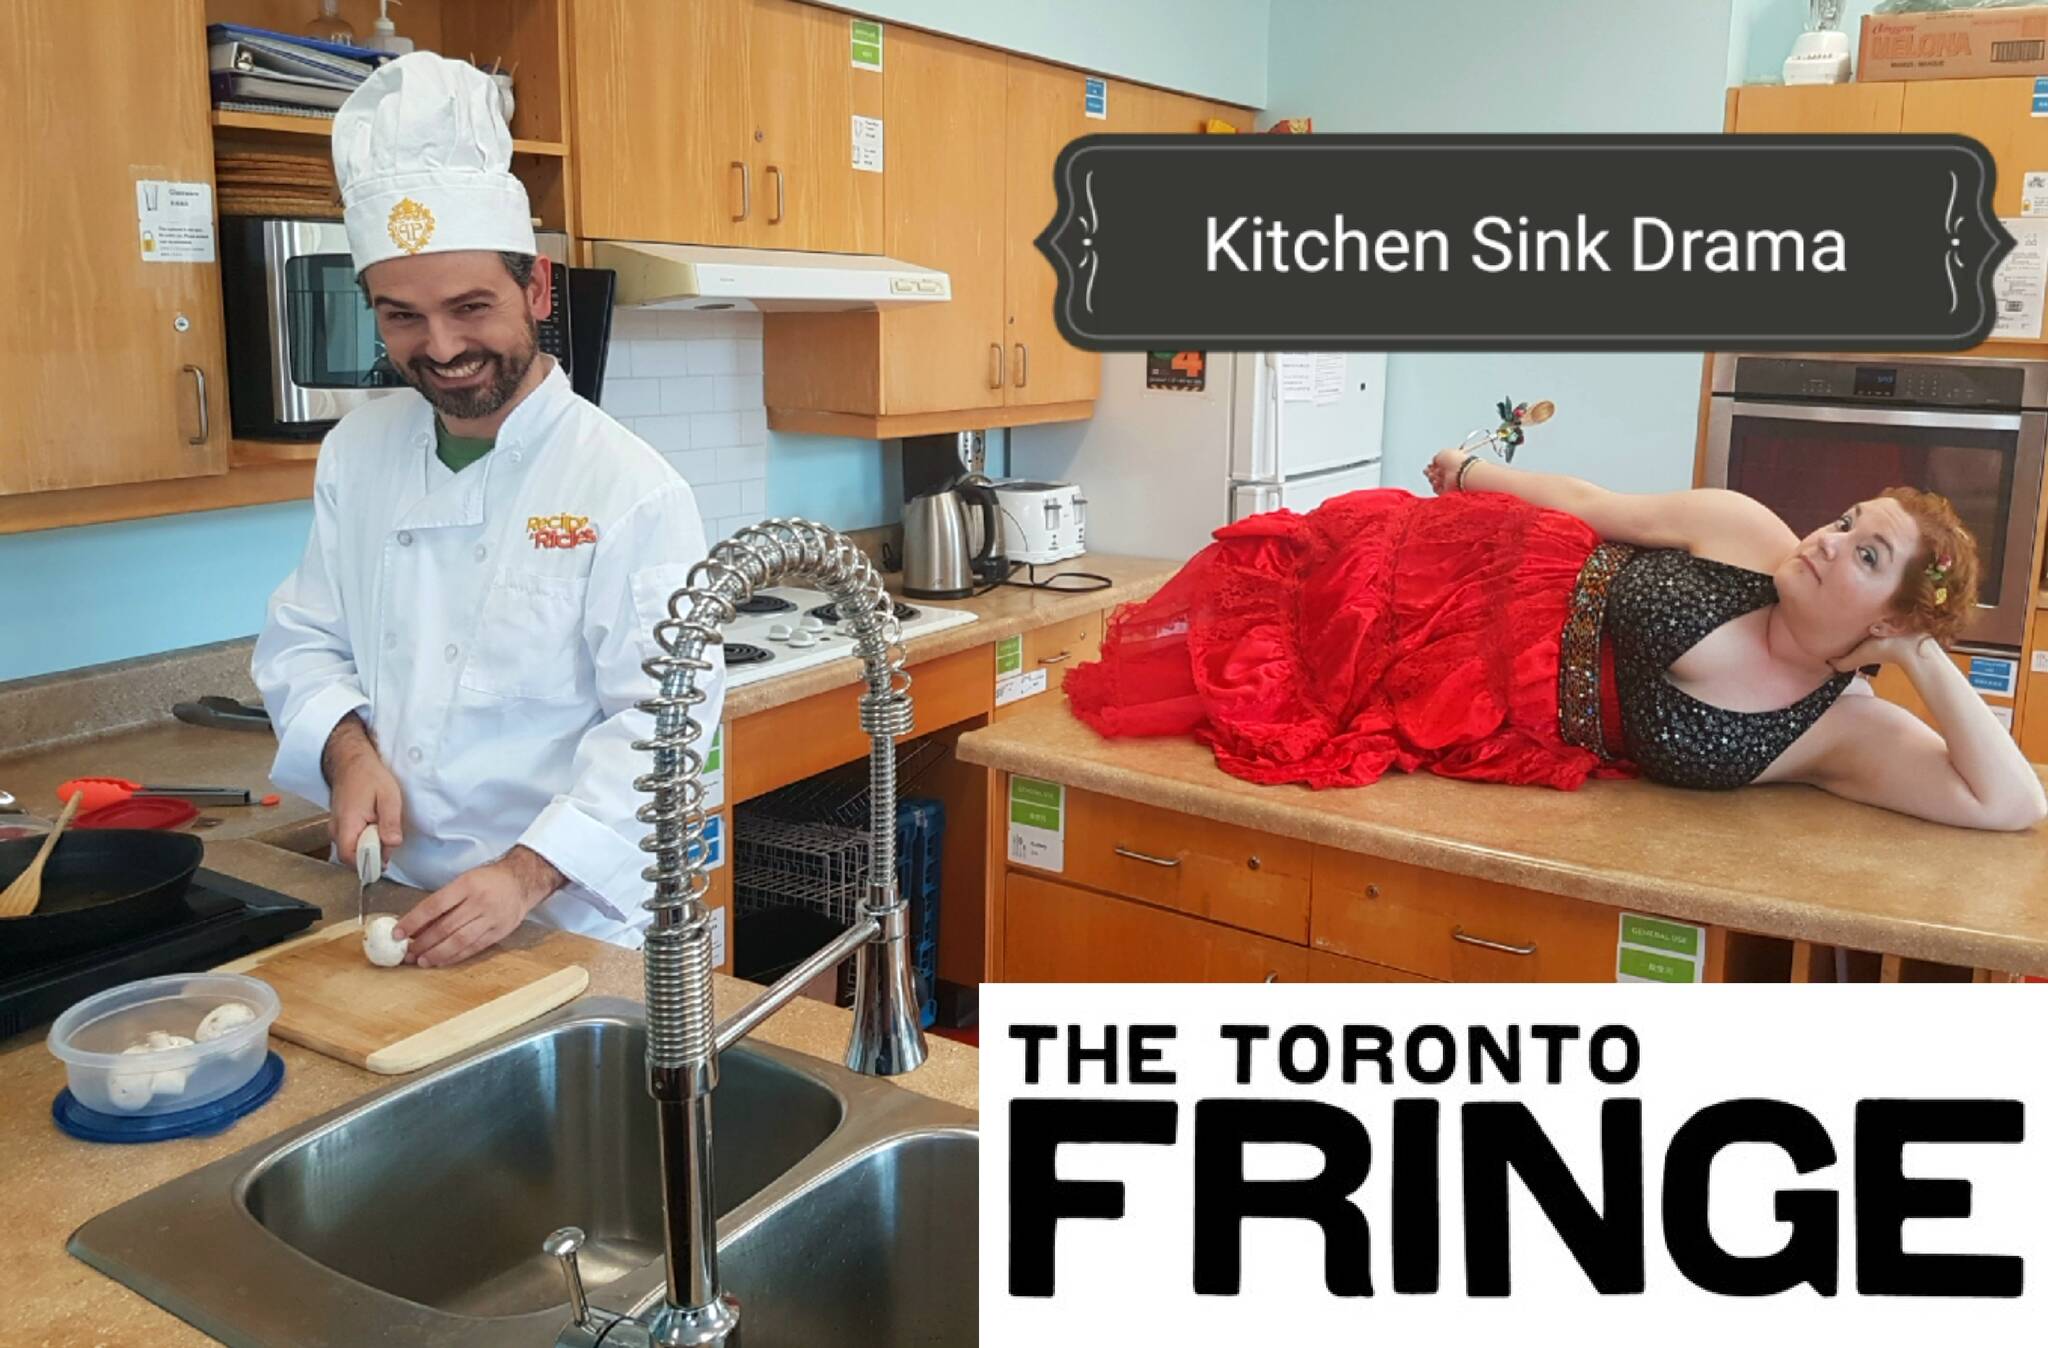 fifties kitchen sink drama